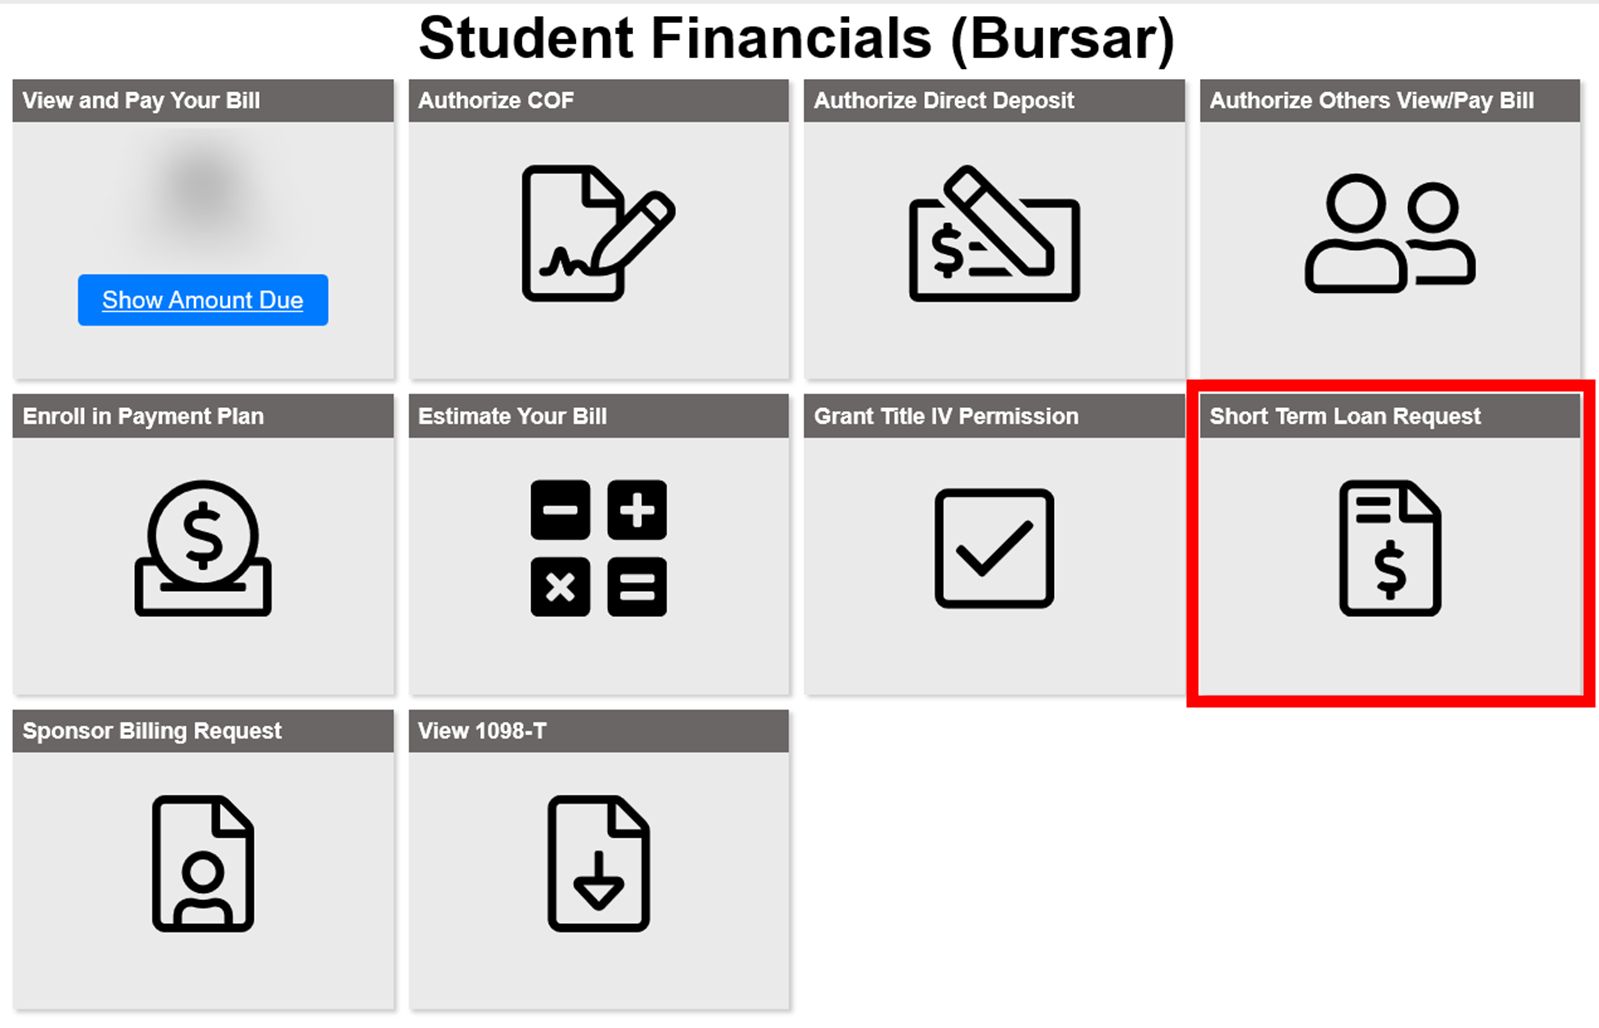 Student Financials Tile - Short Term Loan Request